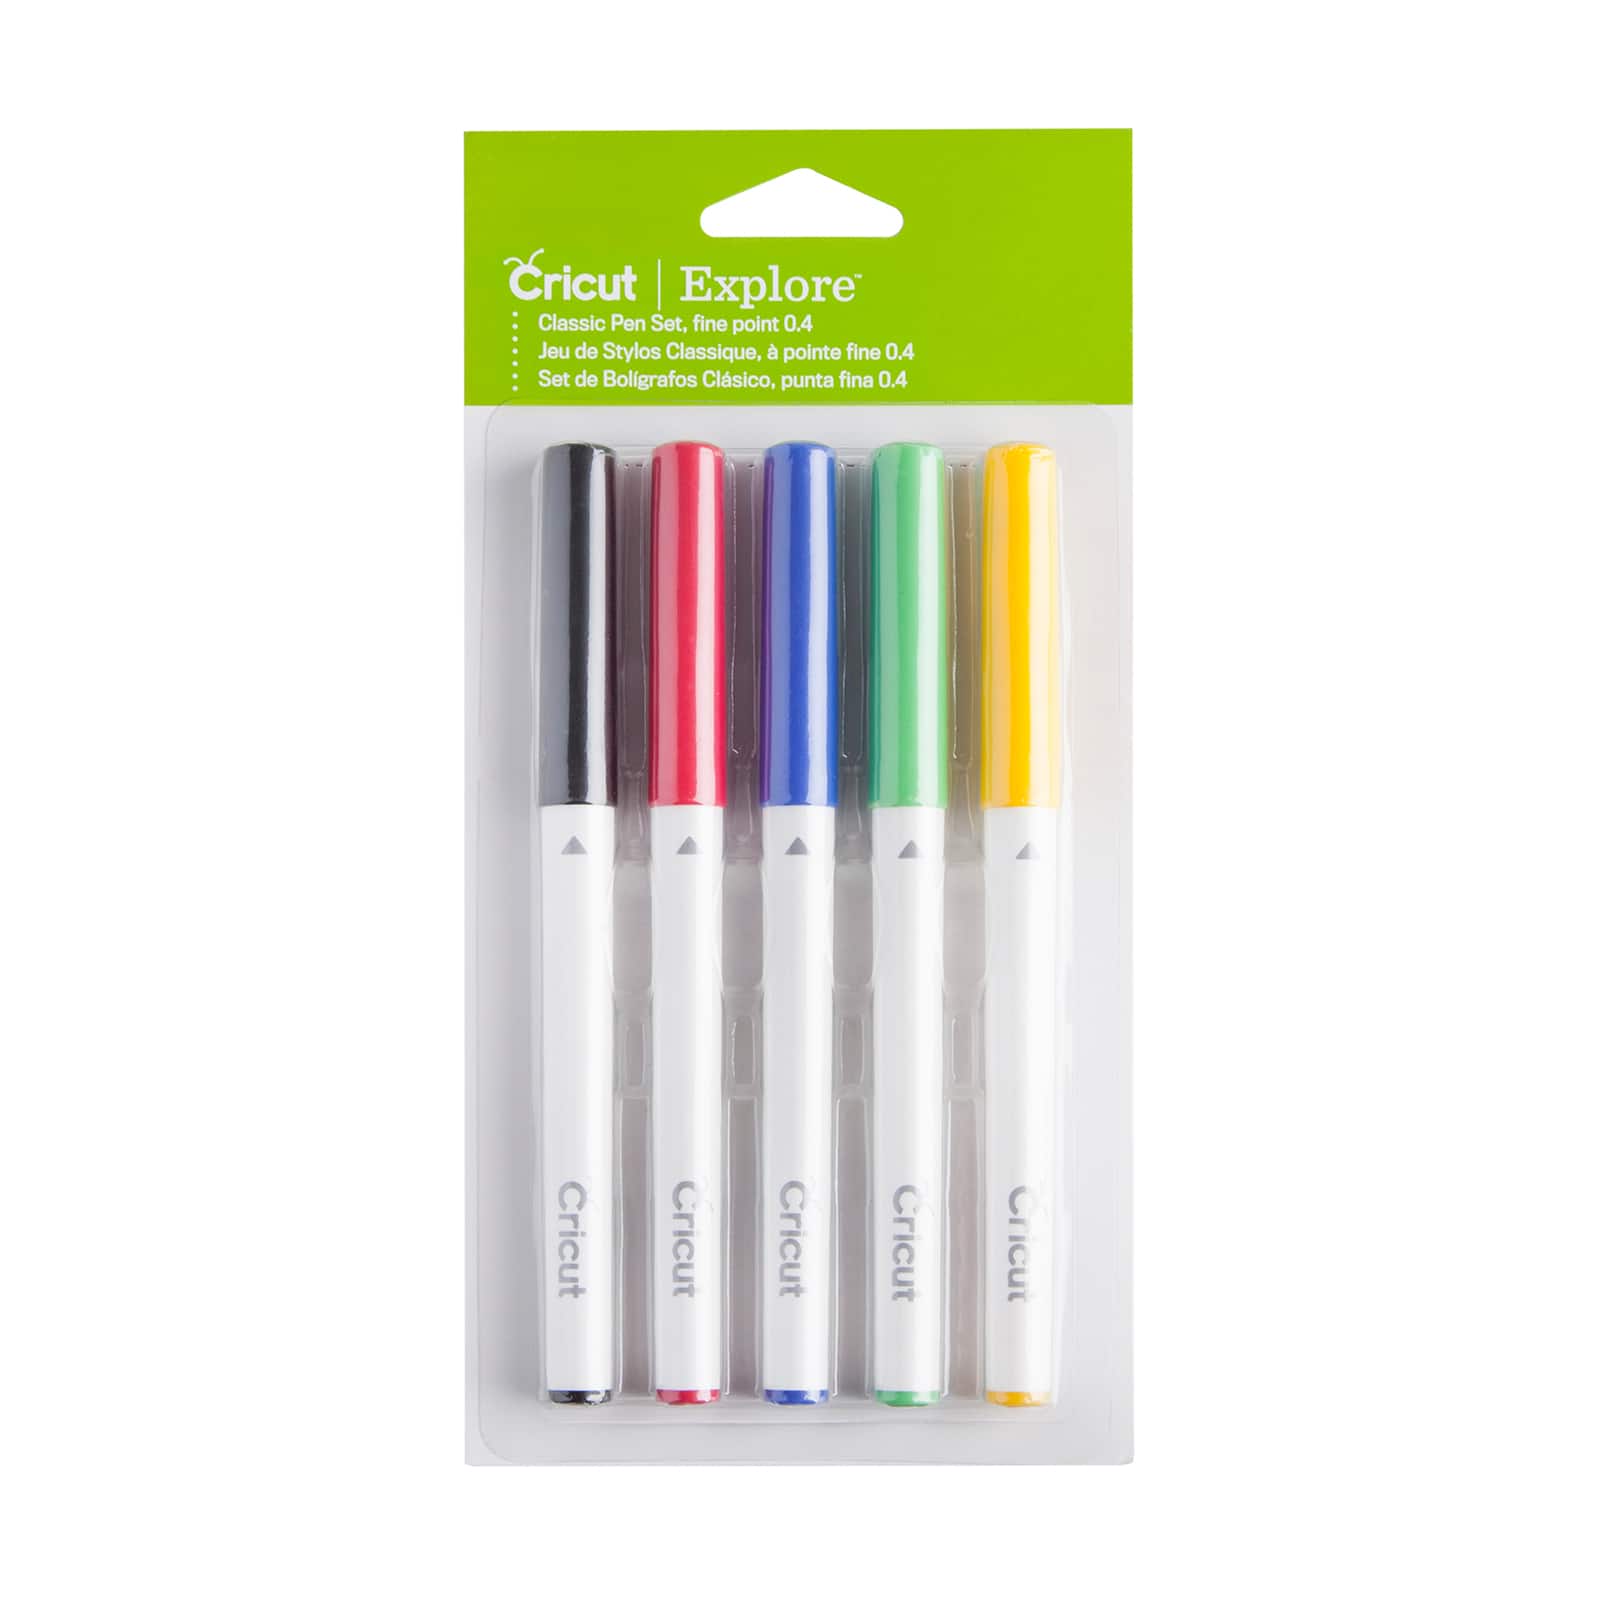 6 Packs: 5 ct. (30 total) Cricut&#xAE; Classic Pen Set